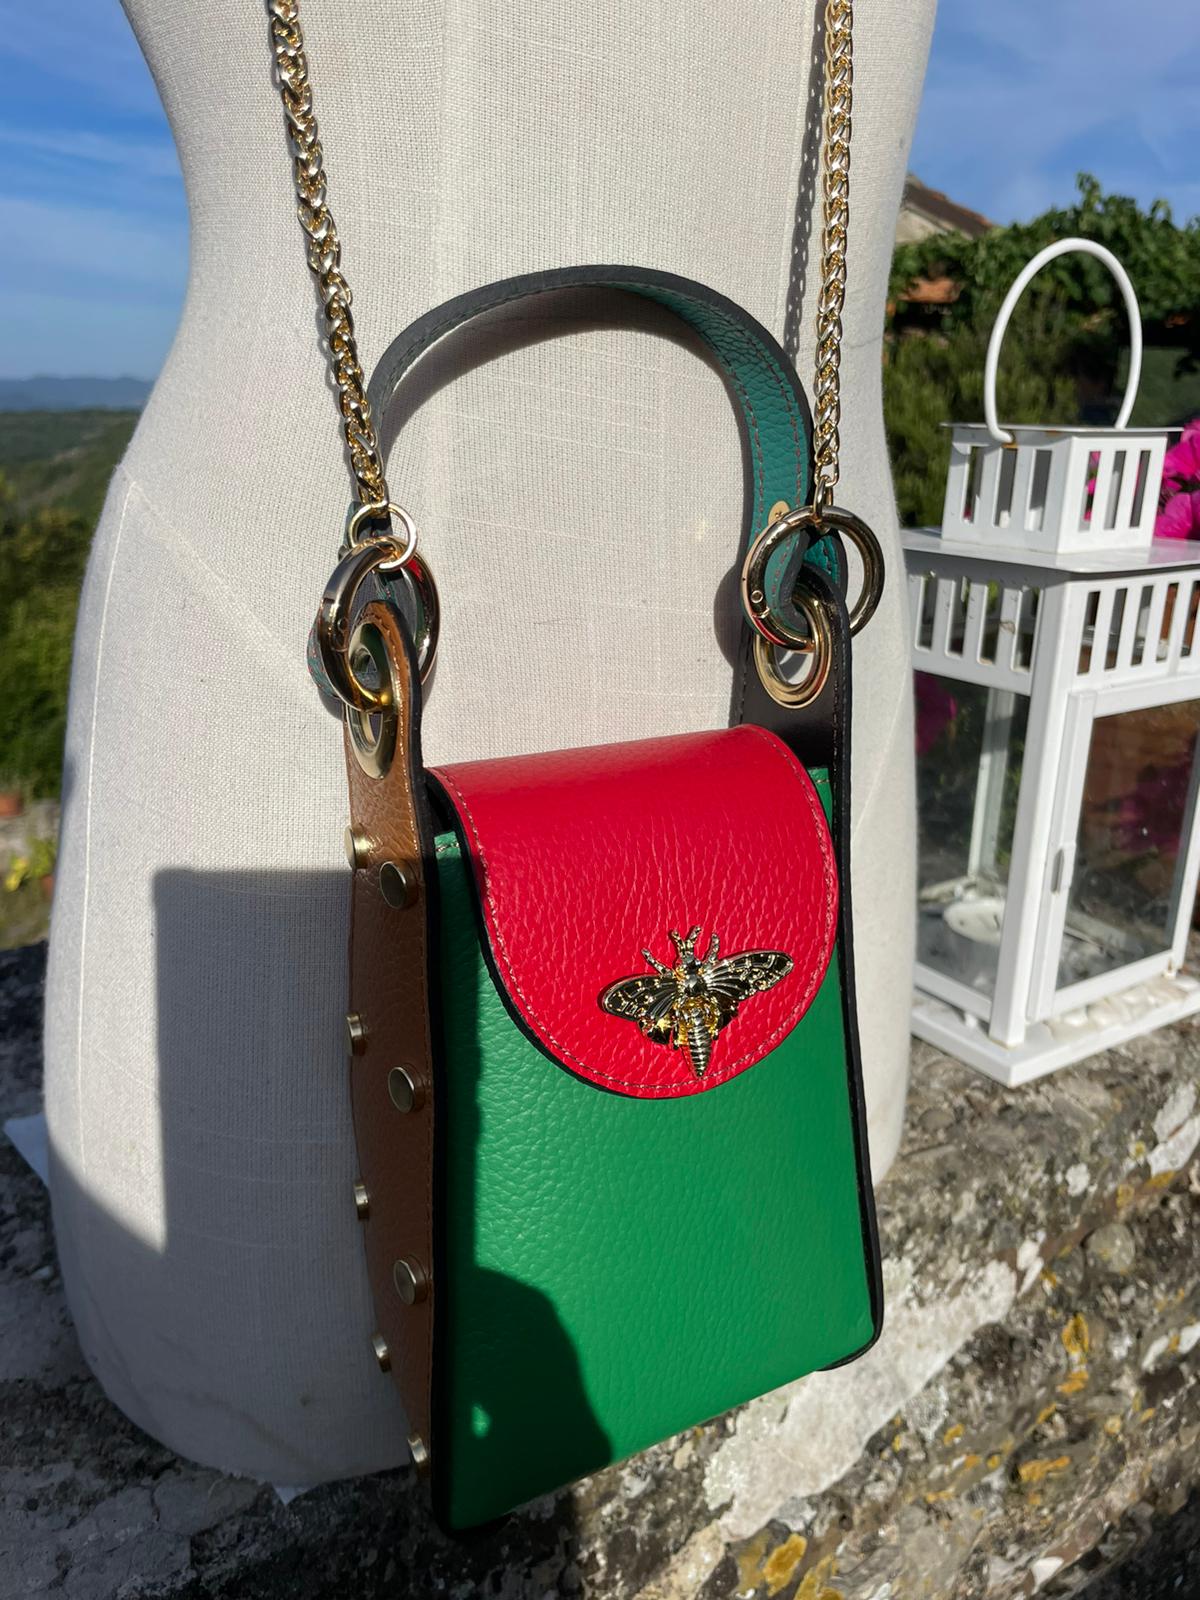 Gorgeous Leather Handbag - Green, Red & White